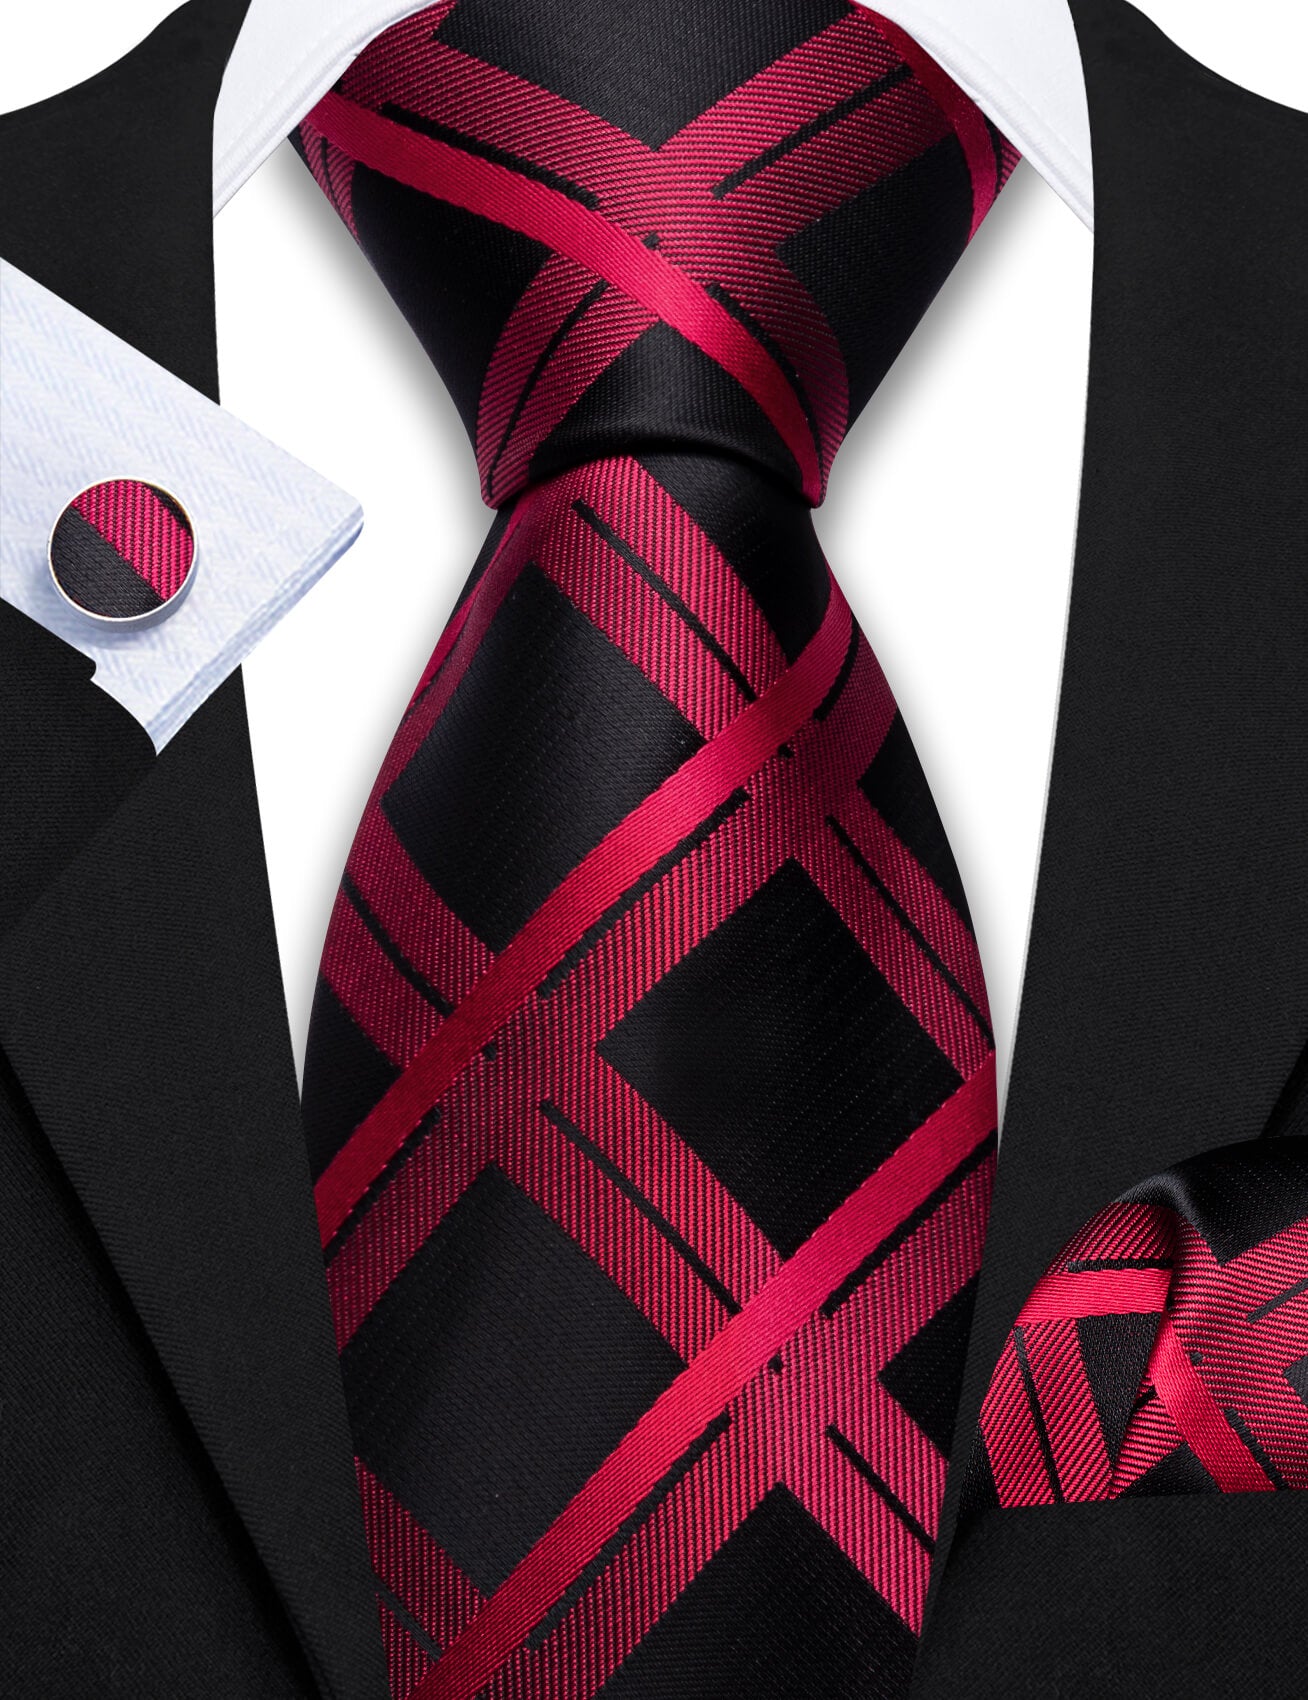 Barry.wang Plaid Tie Dark Red Black Silk Men's Tie Hanky Cufflinks Set